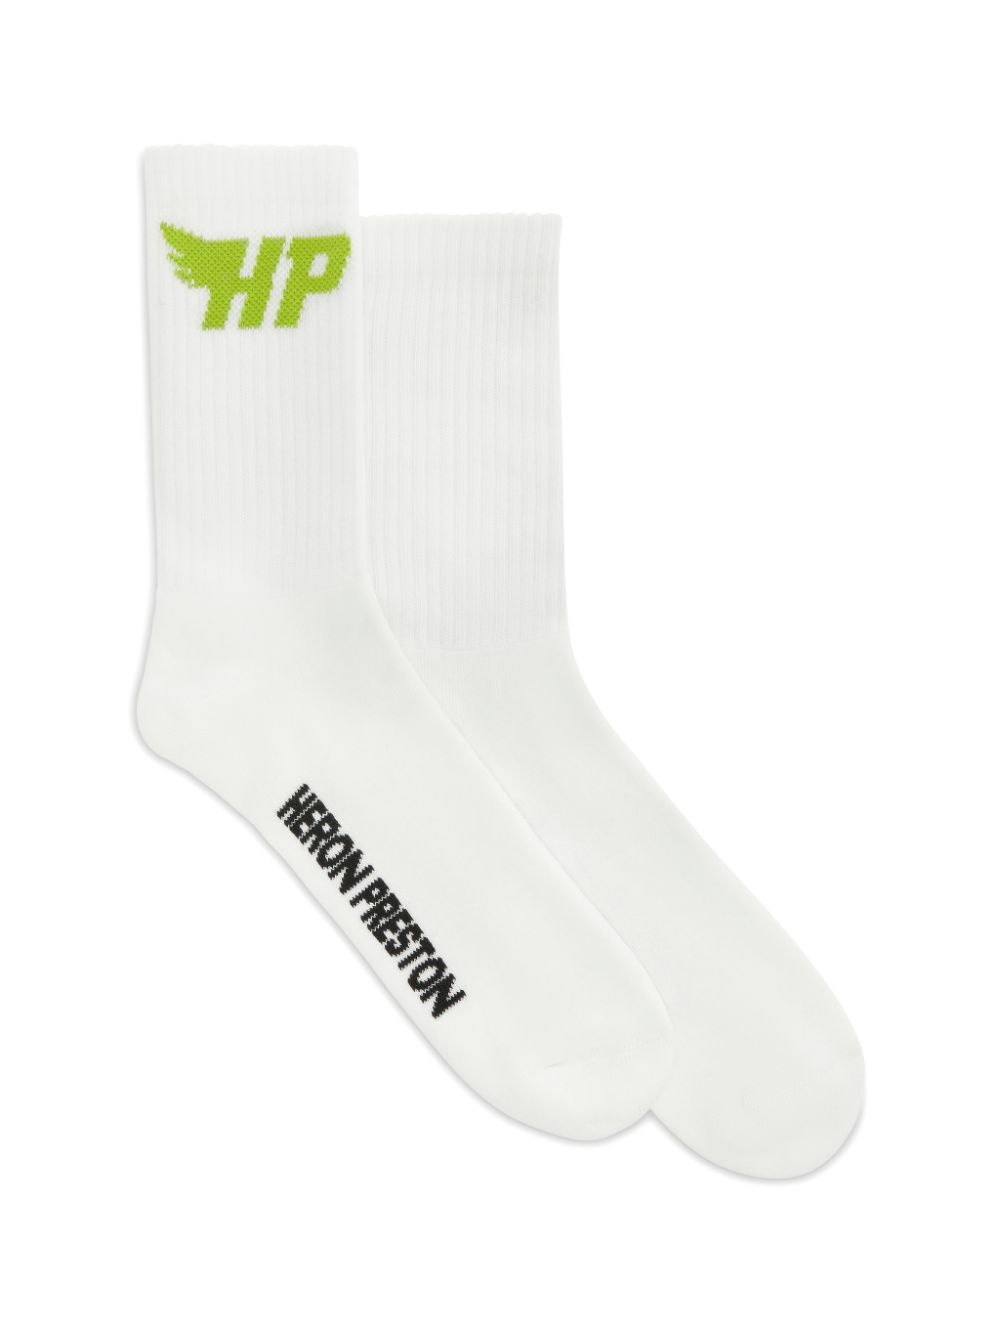 Hp Fly Long Socks - 1